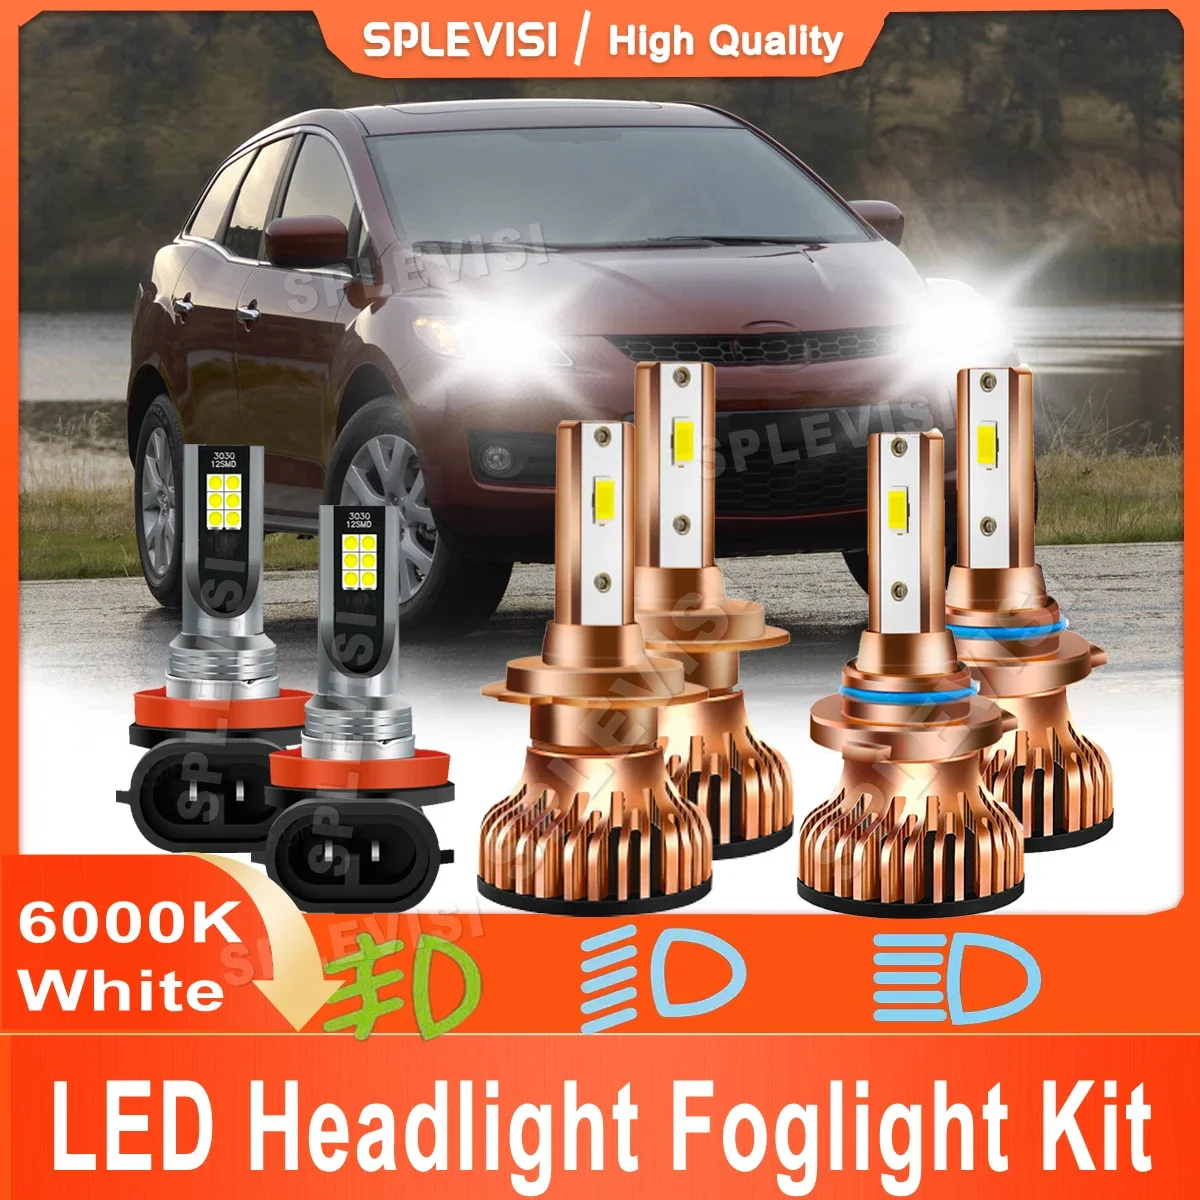 

Upgrade 12x CSP Chips Bright White Headlight Bulbs 9005 High H7 Low Kit Foglamp H11 For Mazda CX-7 2007 2008 2009 2010 2011 2012